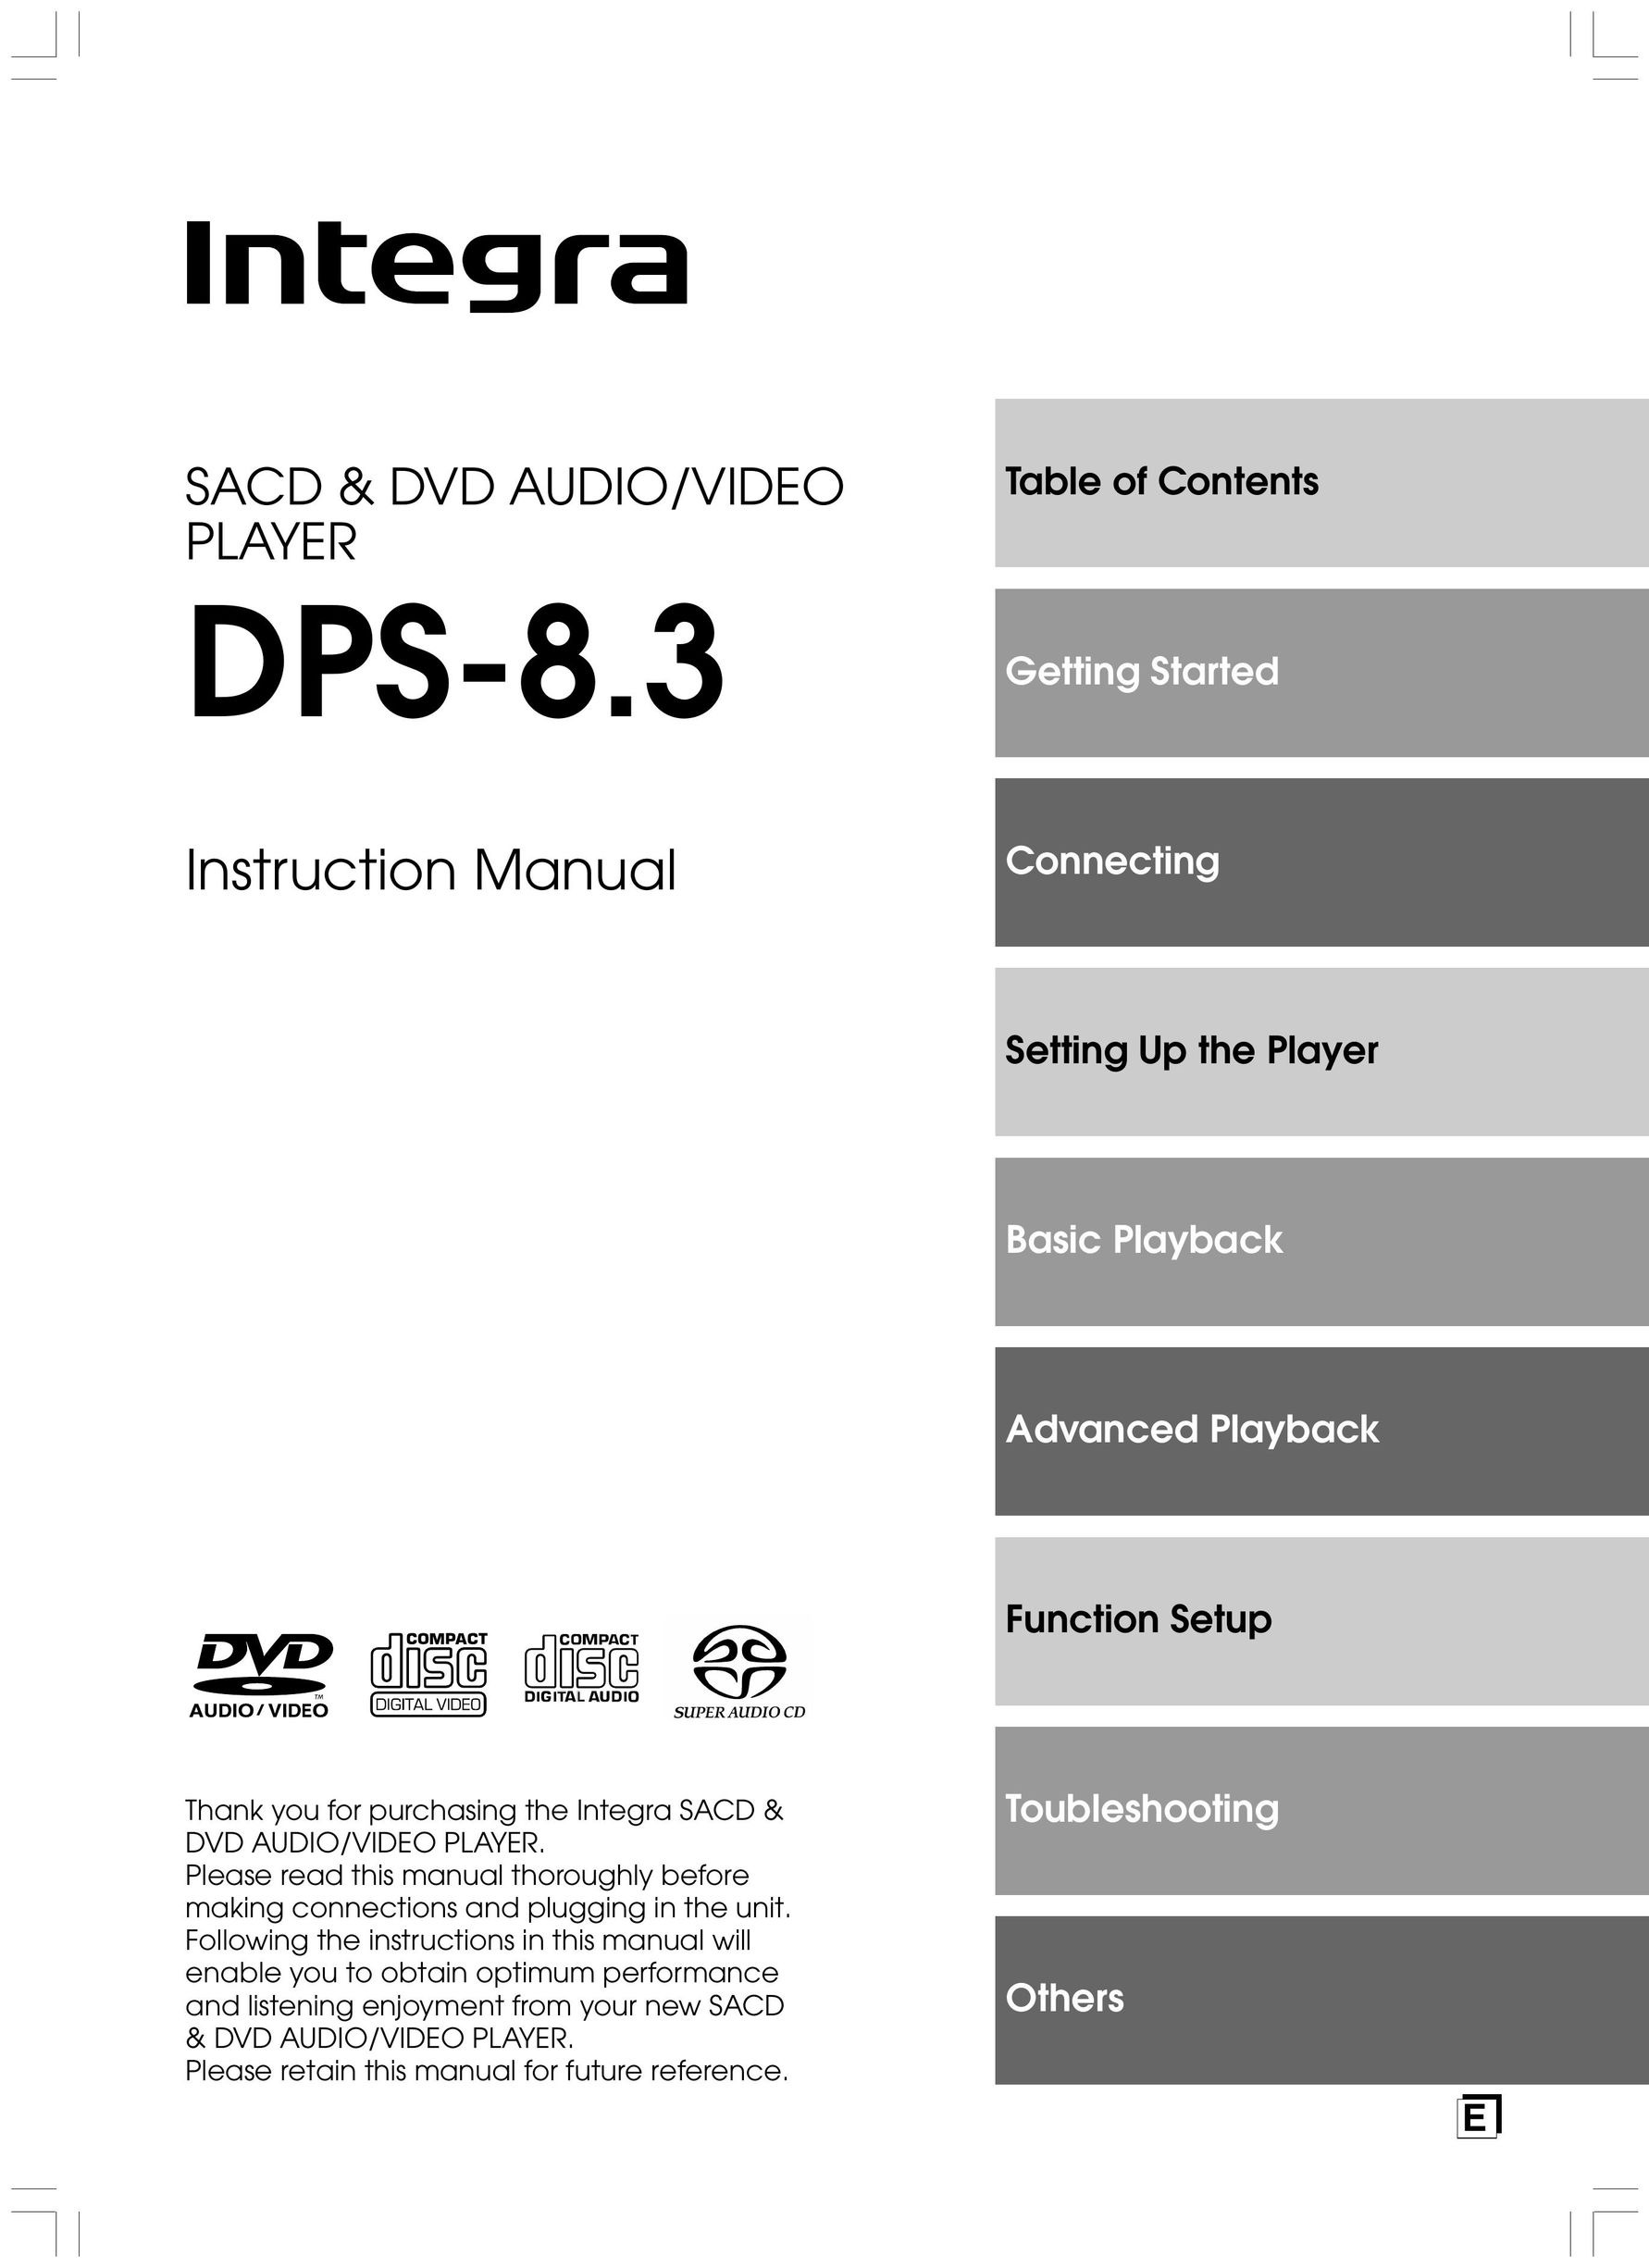 Integra DPS-8.3 DVD Player User Manual